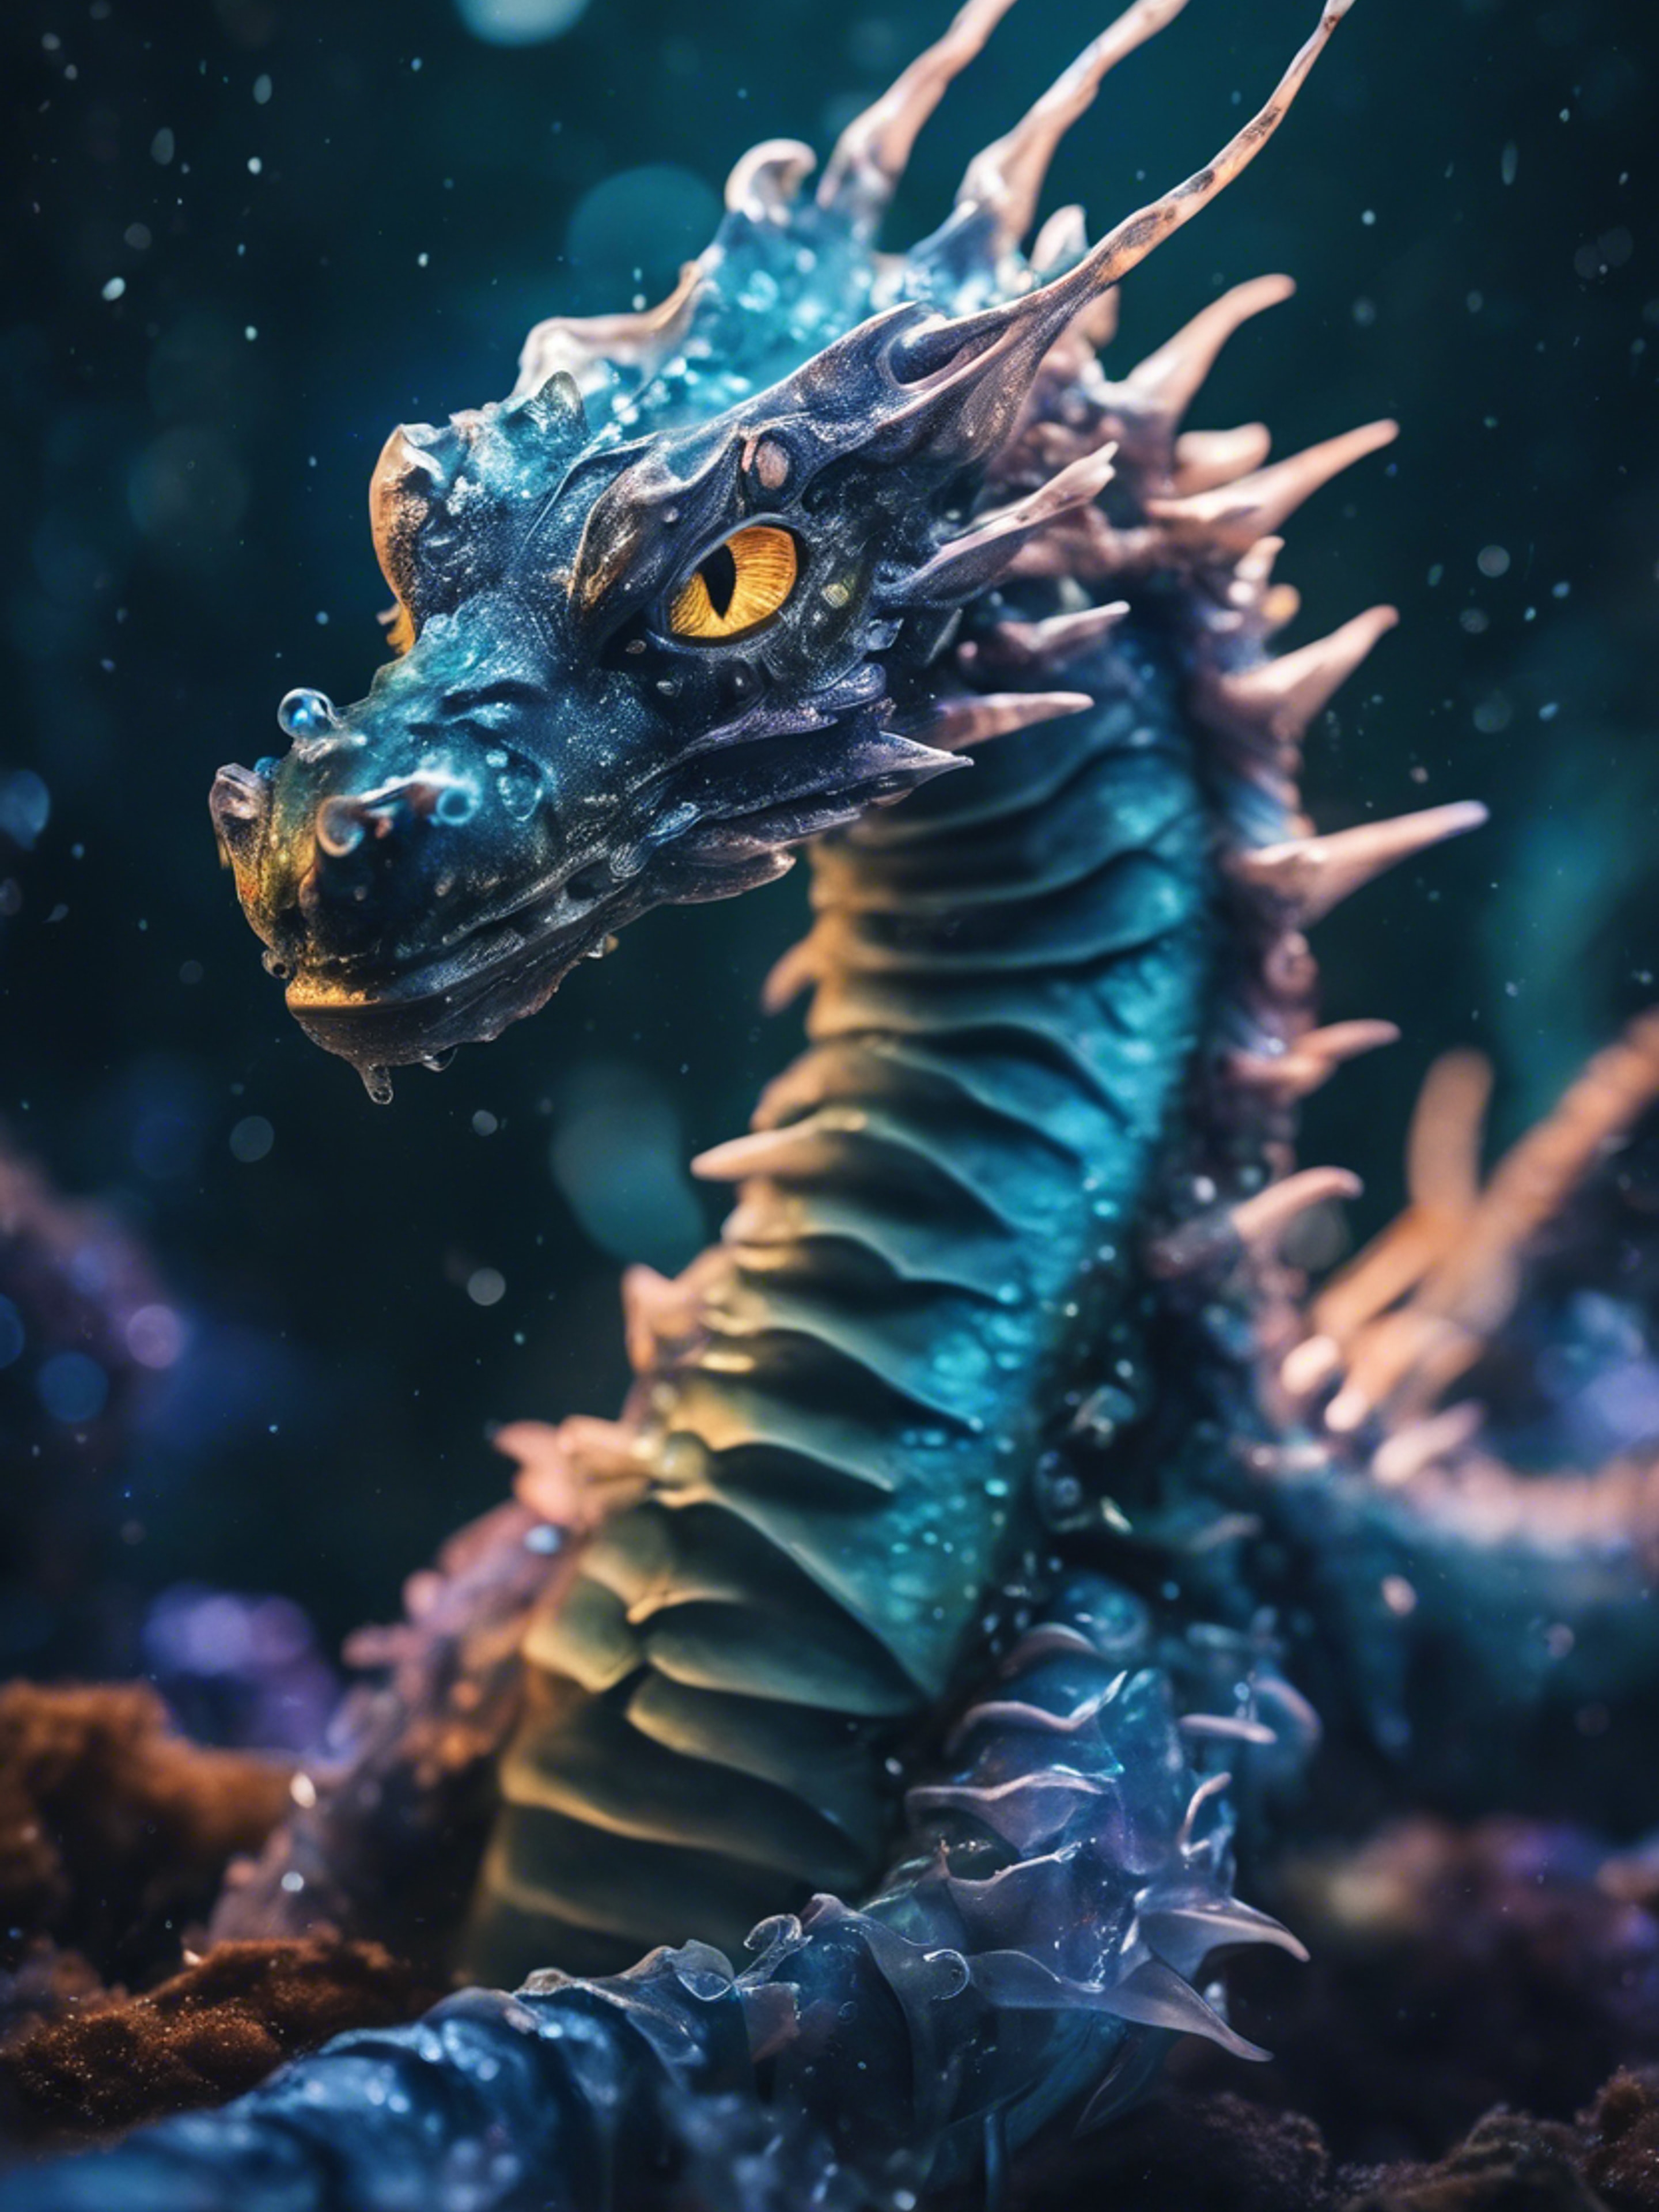 A bioluminescent deep-sea dragon flowing through the ocean depths, illuminating the life around it.壁紙[29e34229f4ba417388c0]